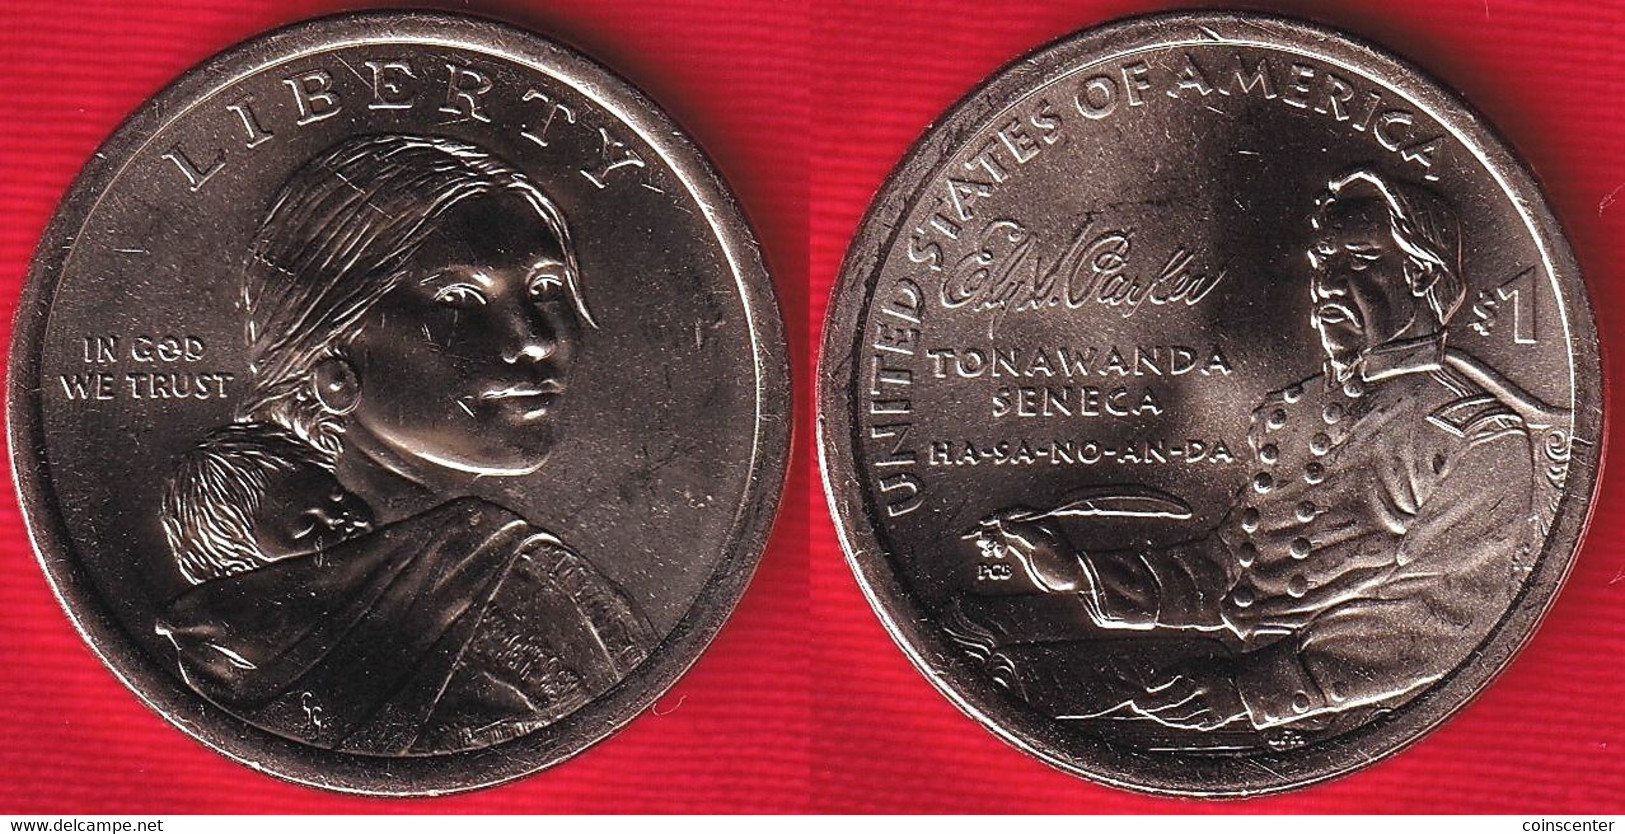 USA 1 Dollar 2022 D Mint "Native American - Ely Samuel Parker" UNC - 2000-…: Sacagawea